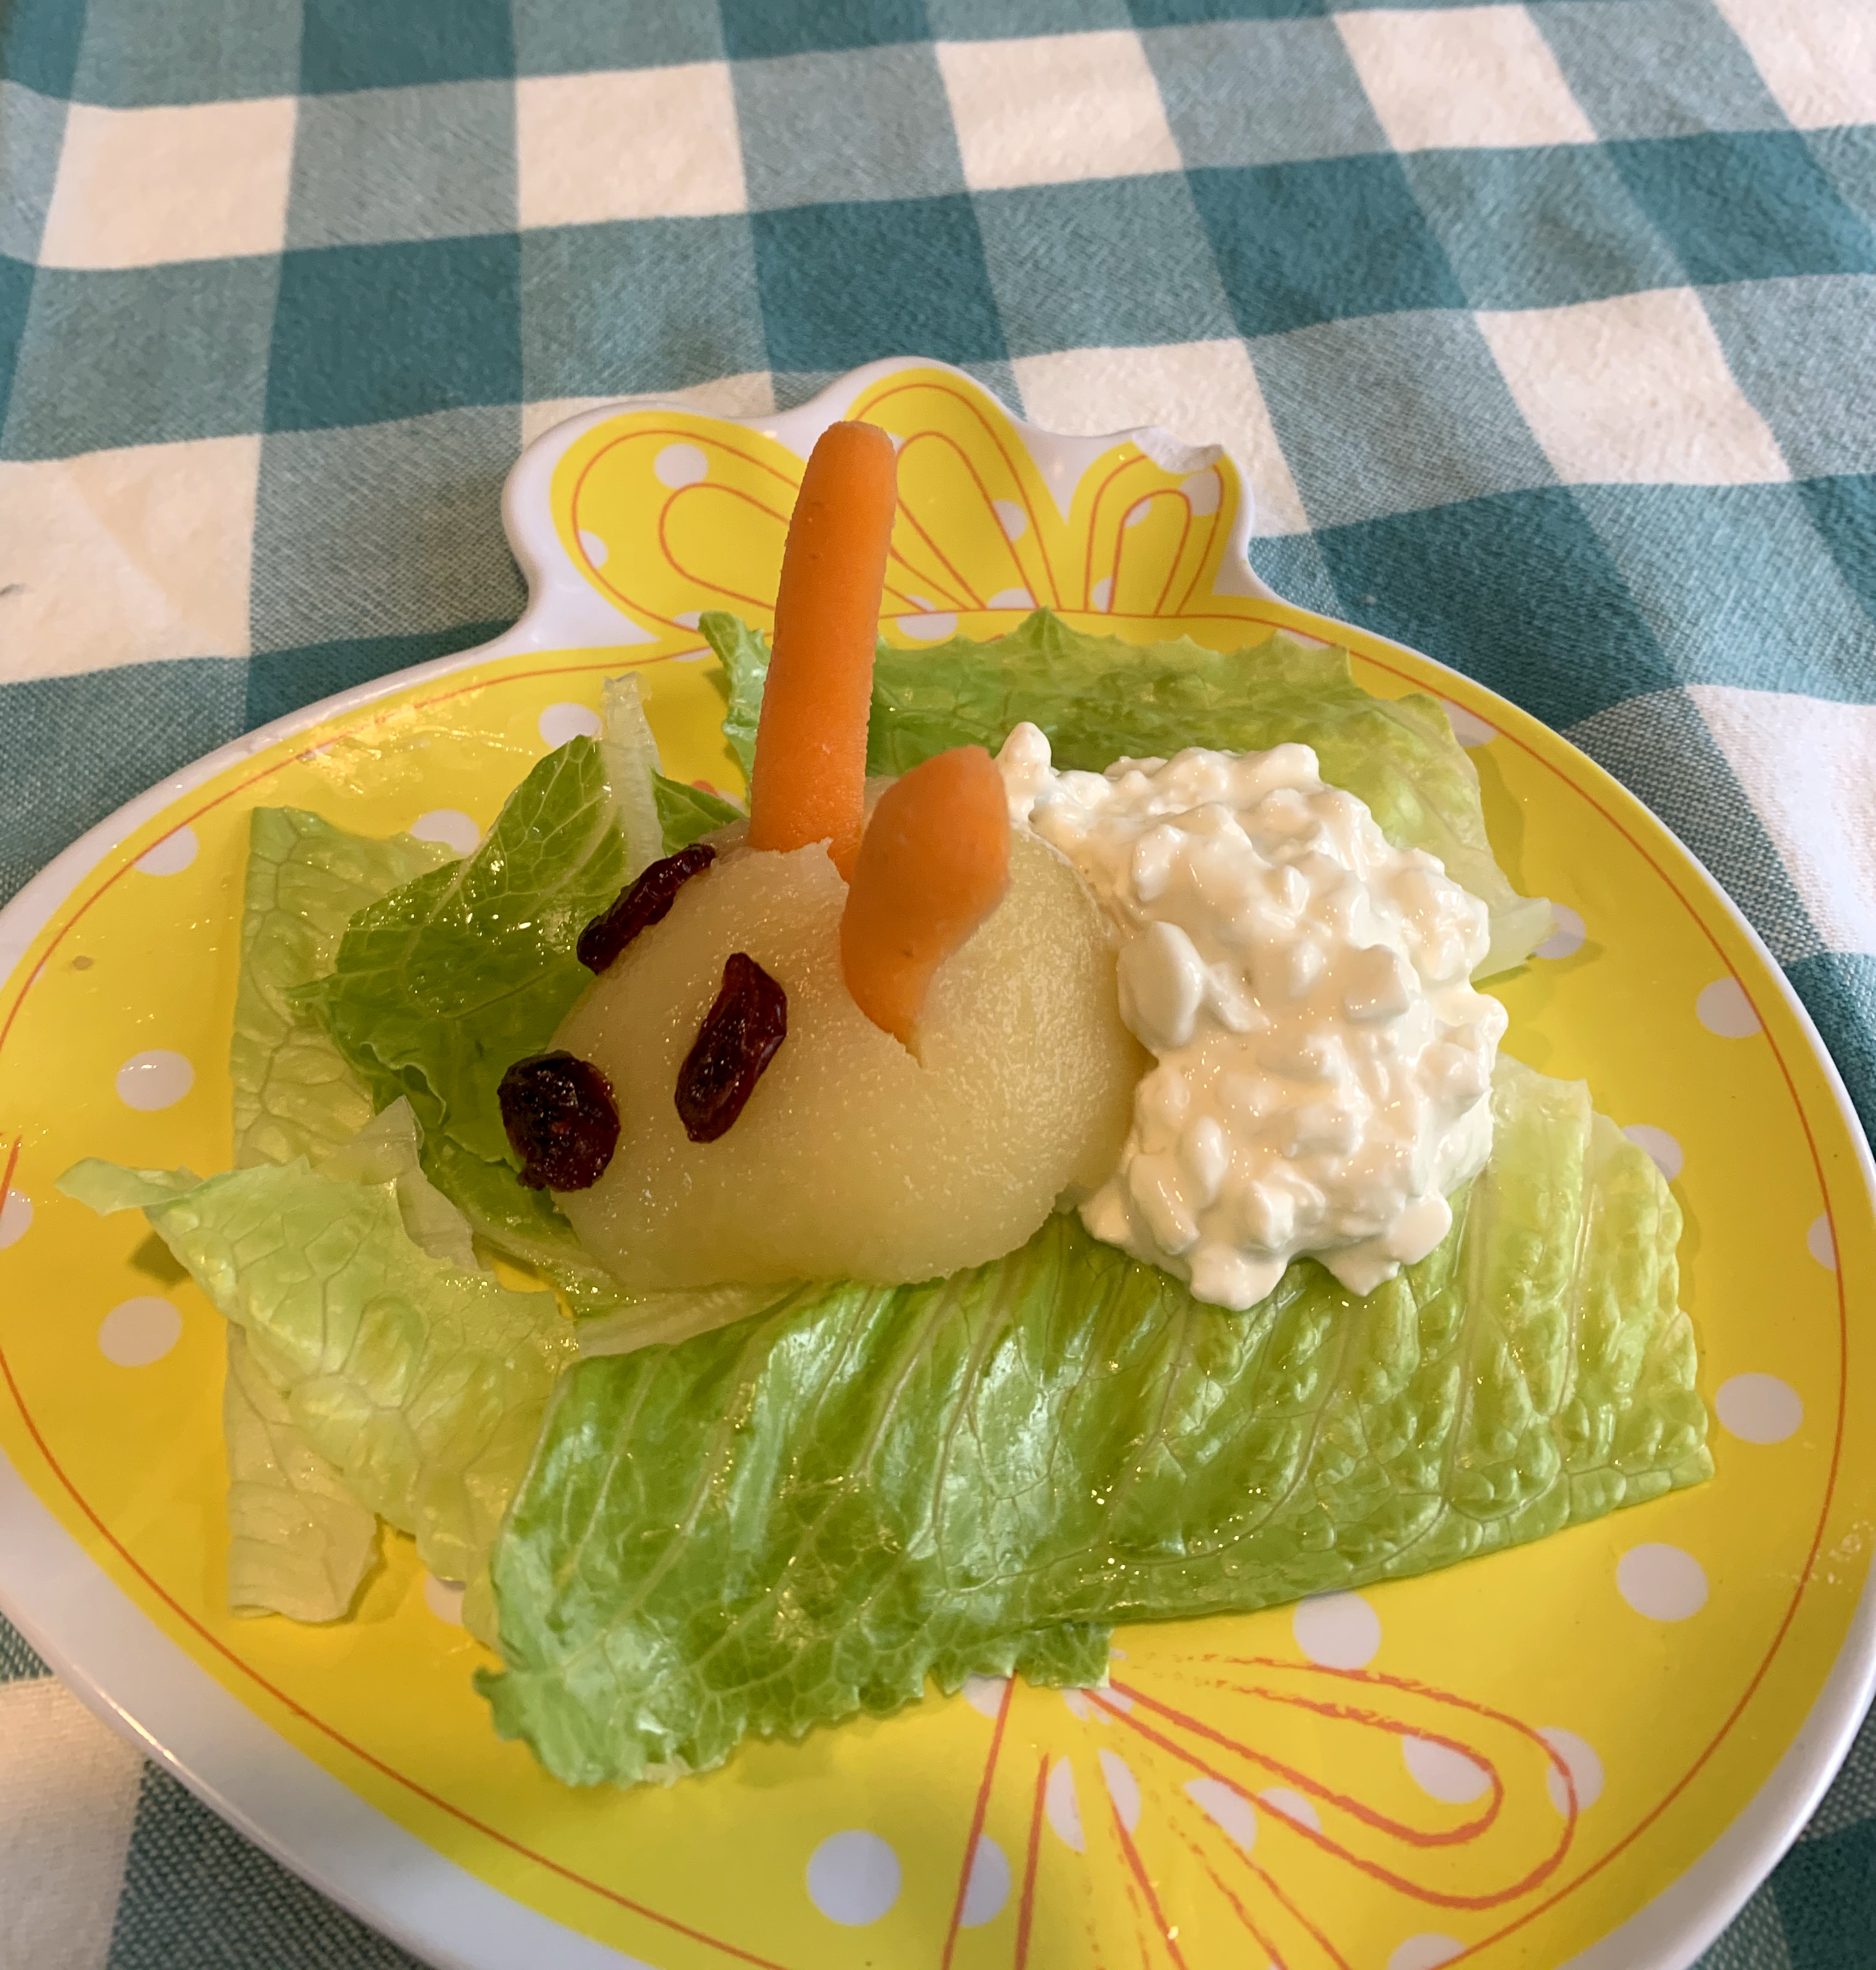 Bunny Salad